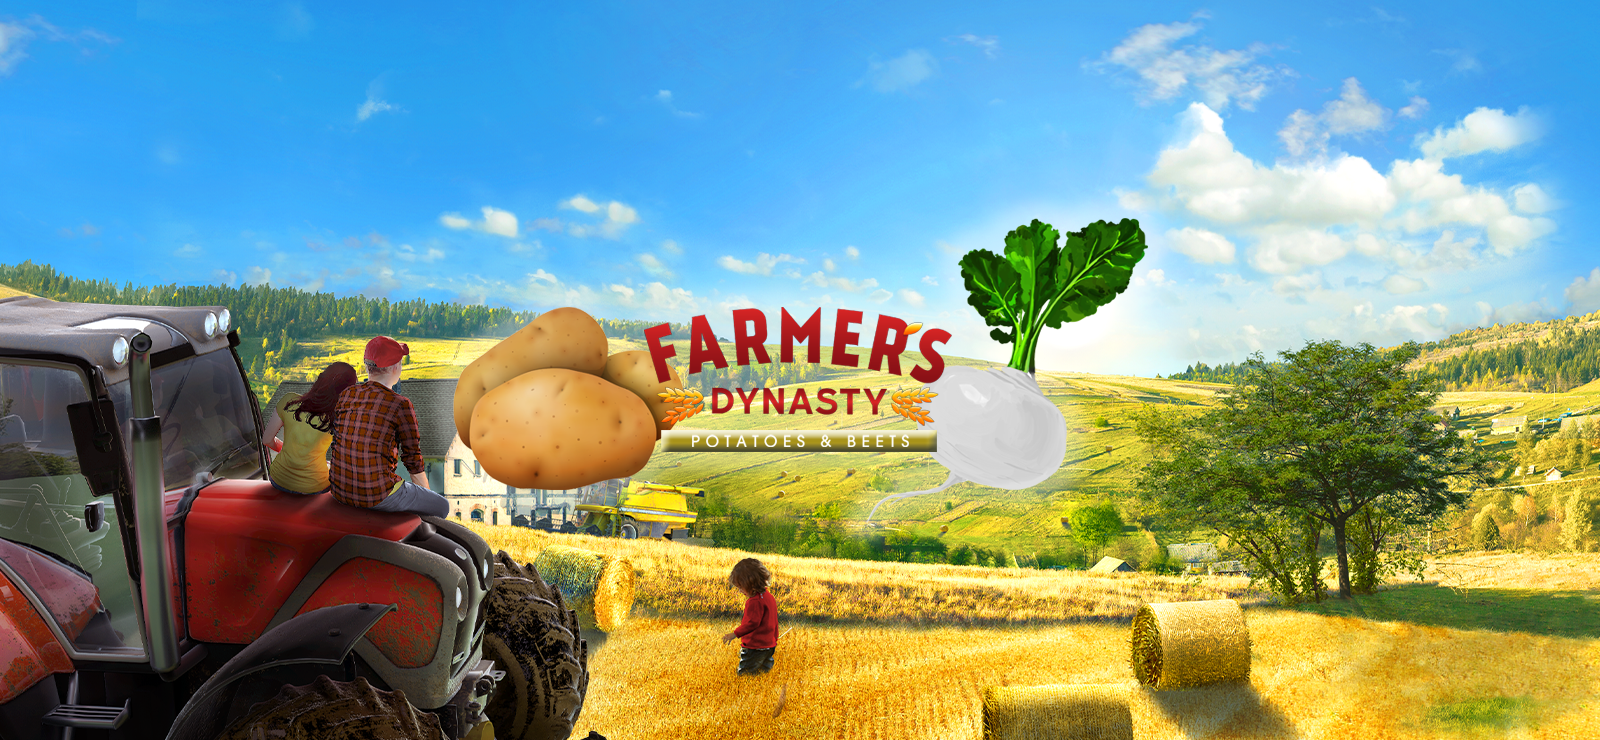 Farmer's Dynasty - Potatoes & Beets